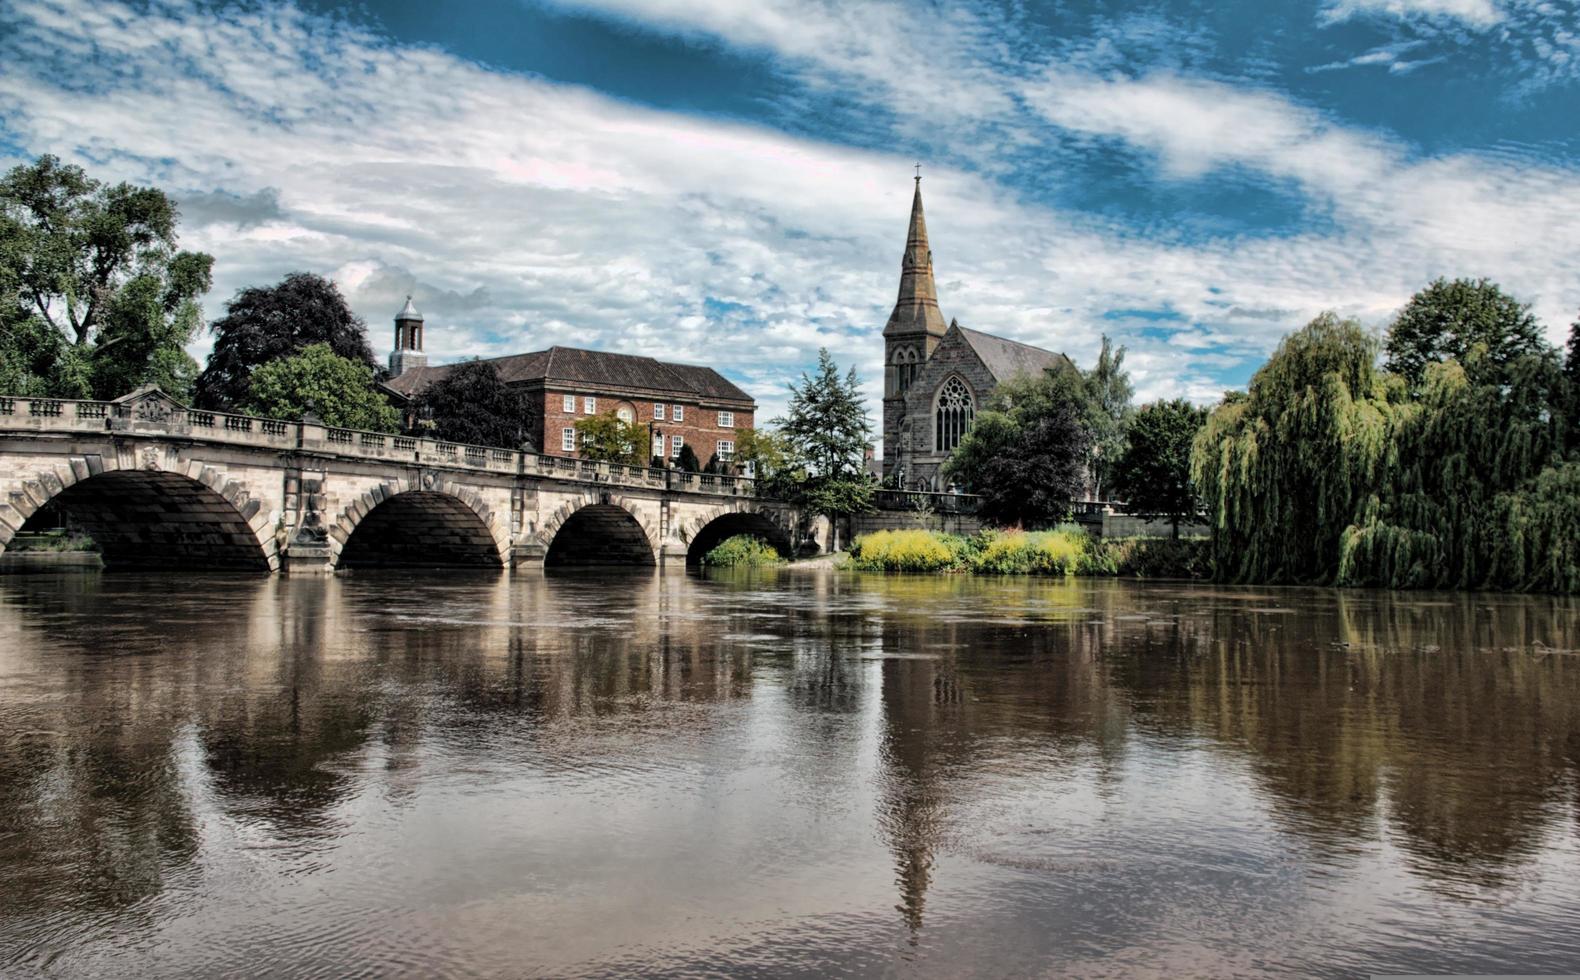 The English Bridge Shrewsbury photo